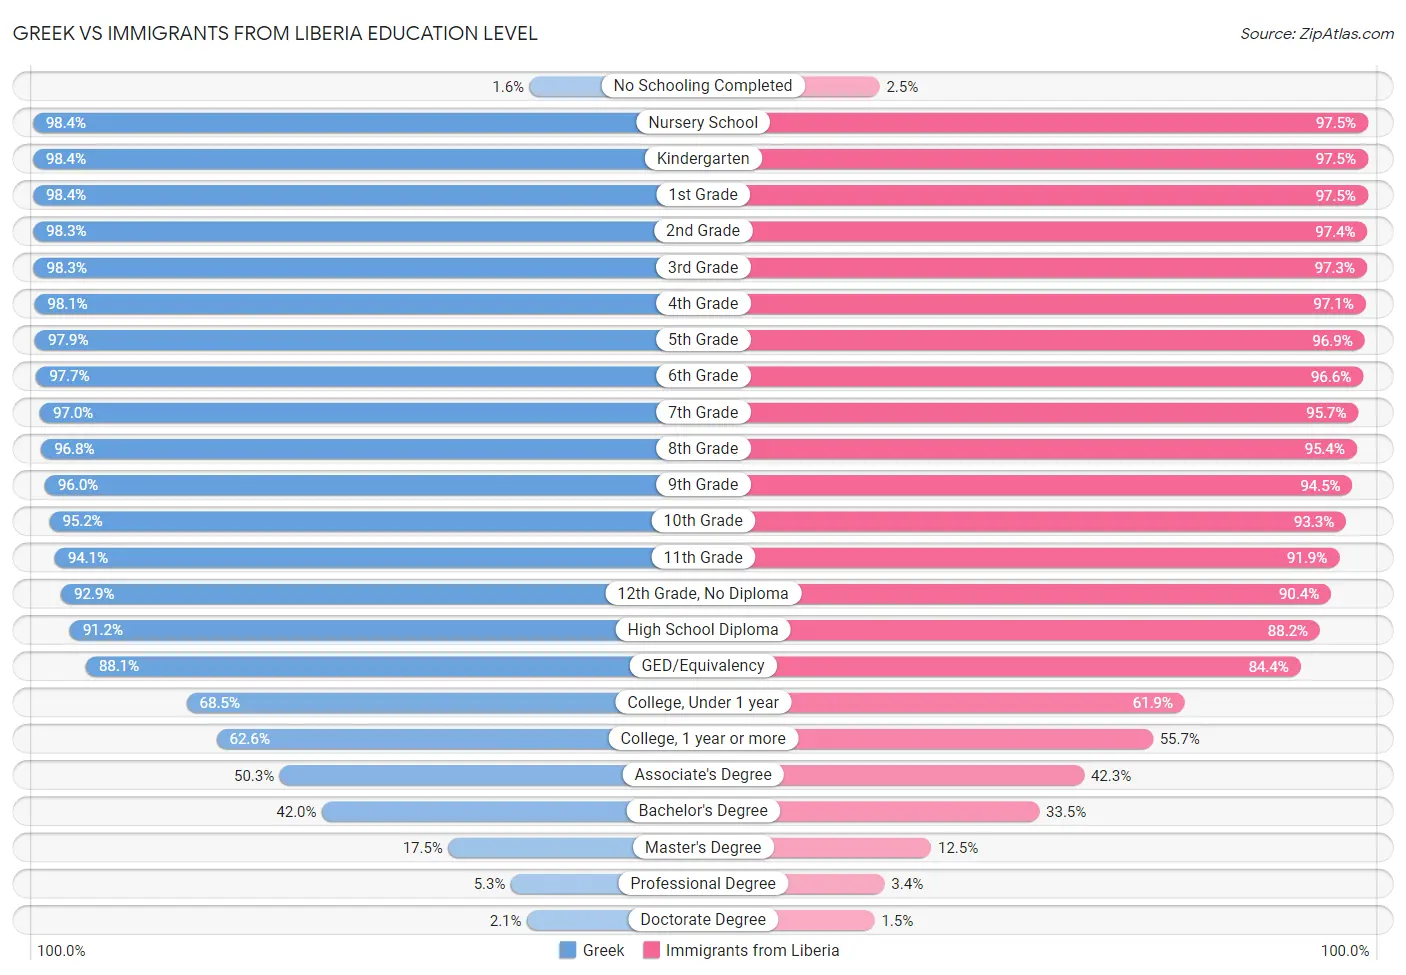 Greek vs Immigrants from Liberia Education Level